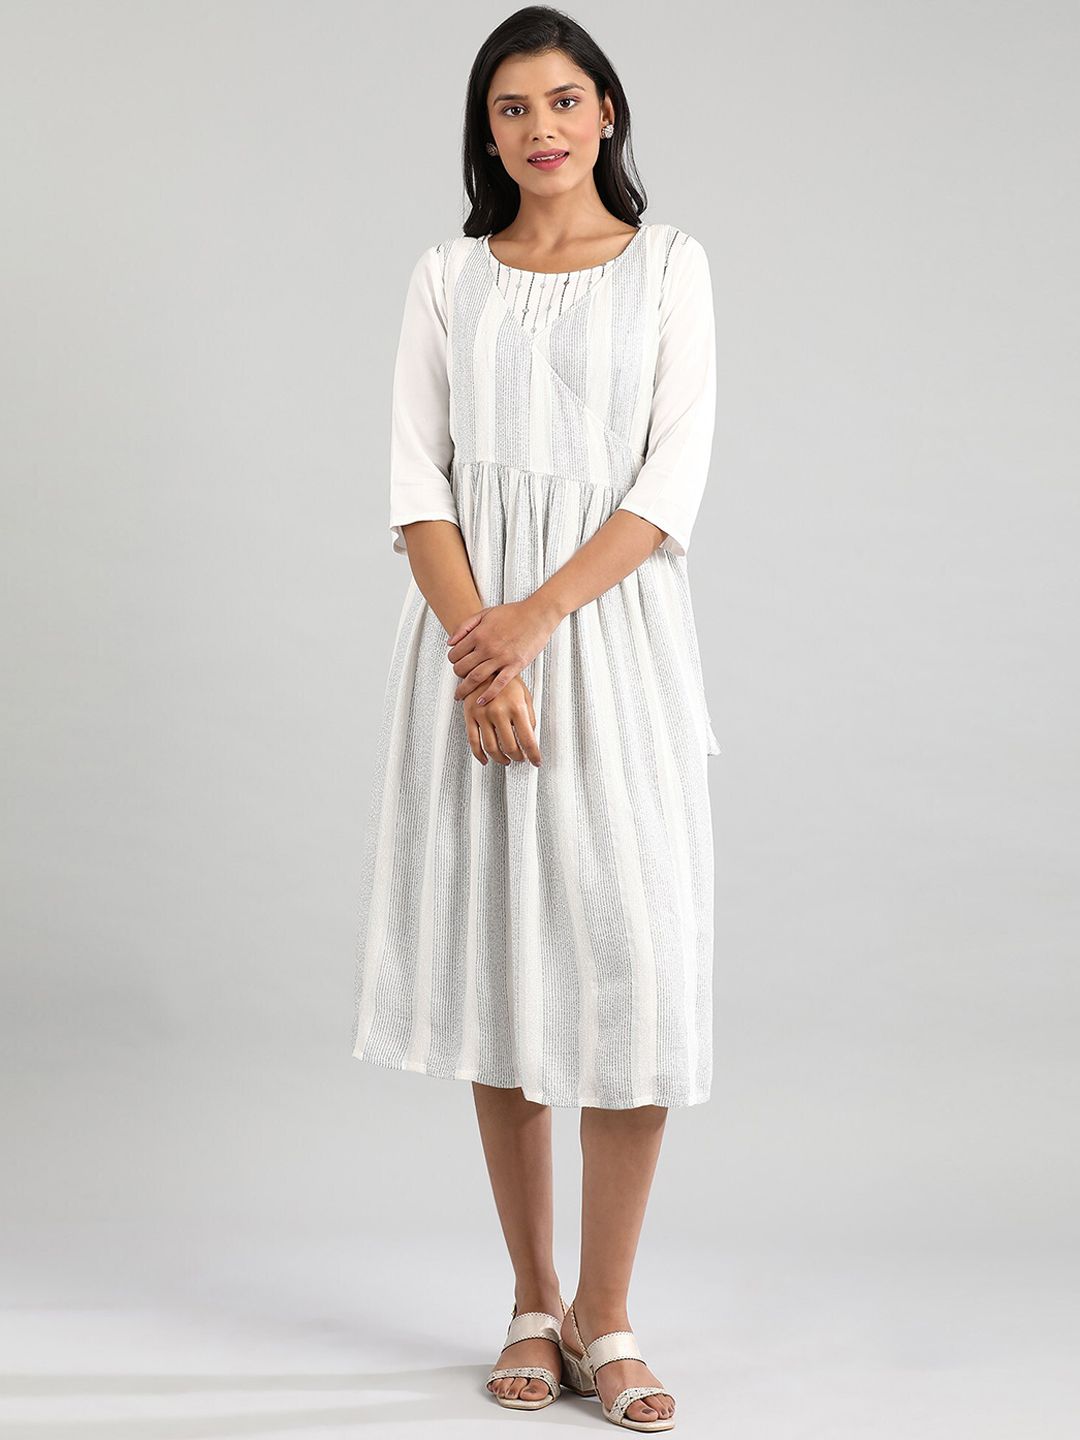 AURELIA White A-Line Midi Dress Price in India